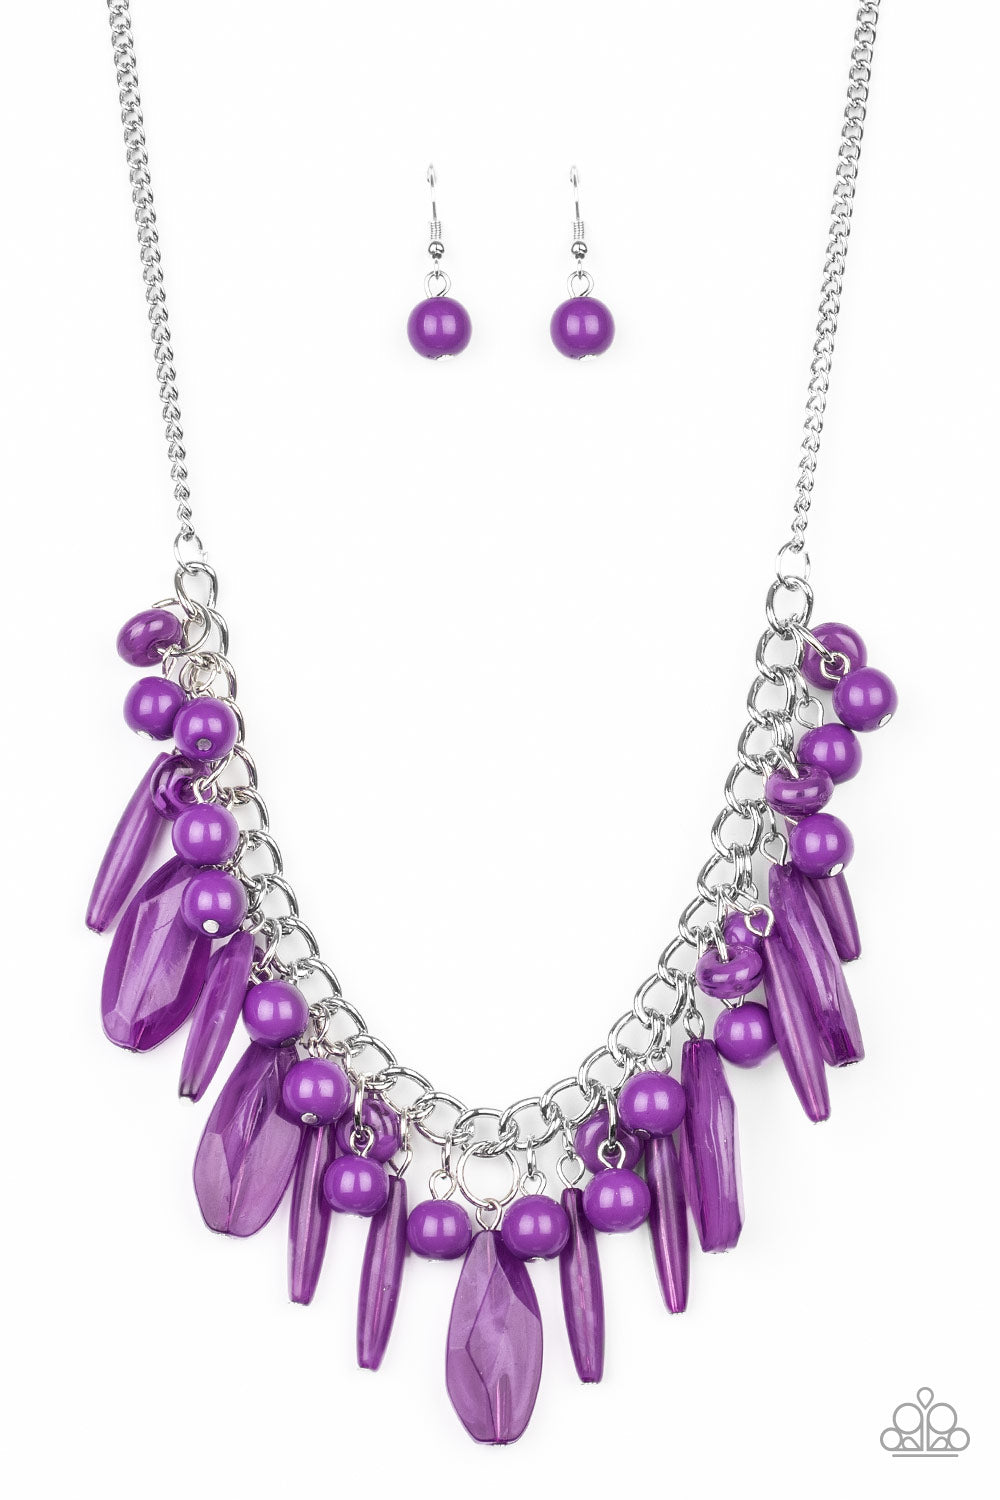 Paparazzi Necklaces - Miami Martinis - Purple